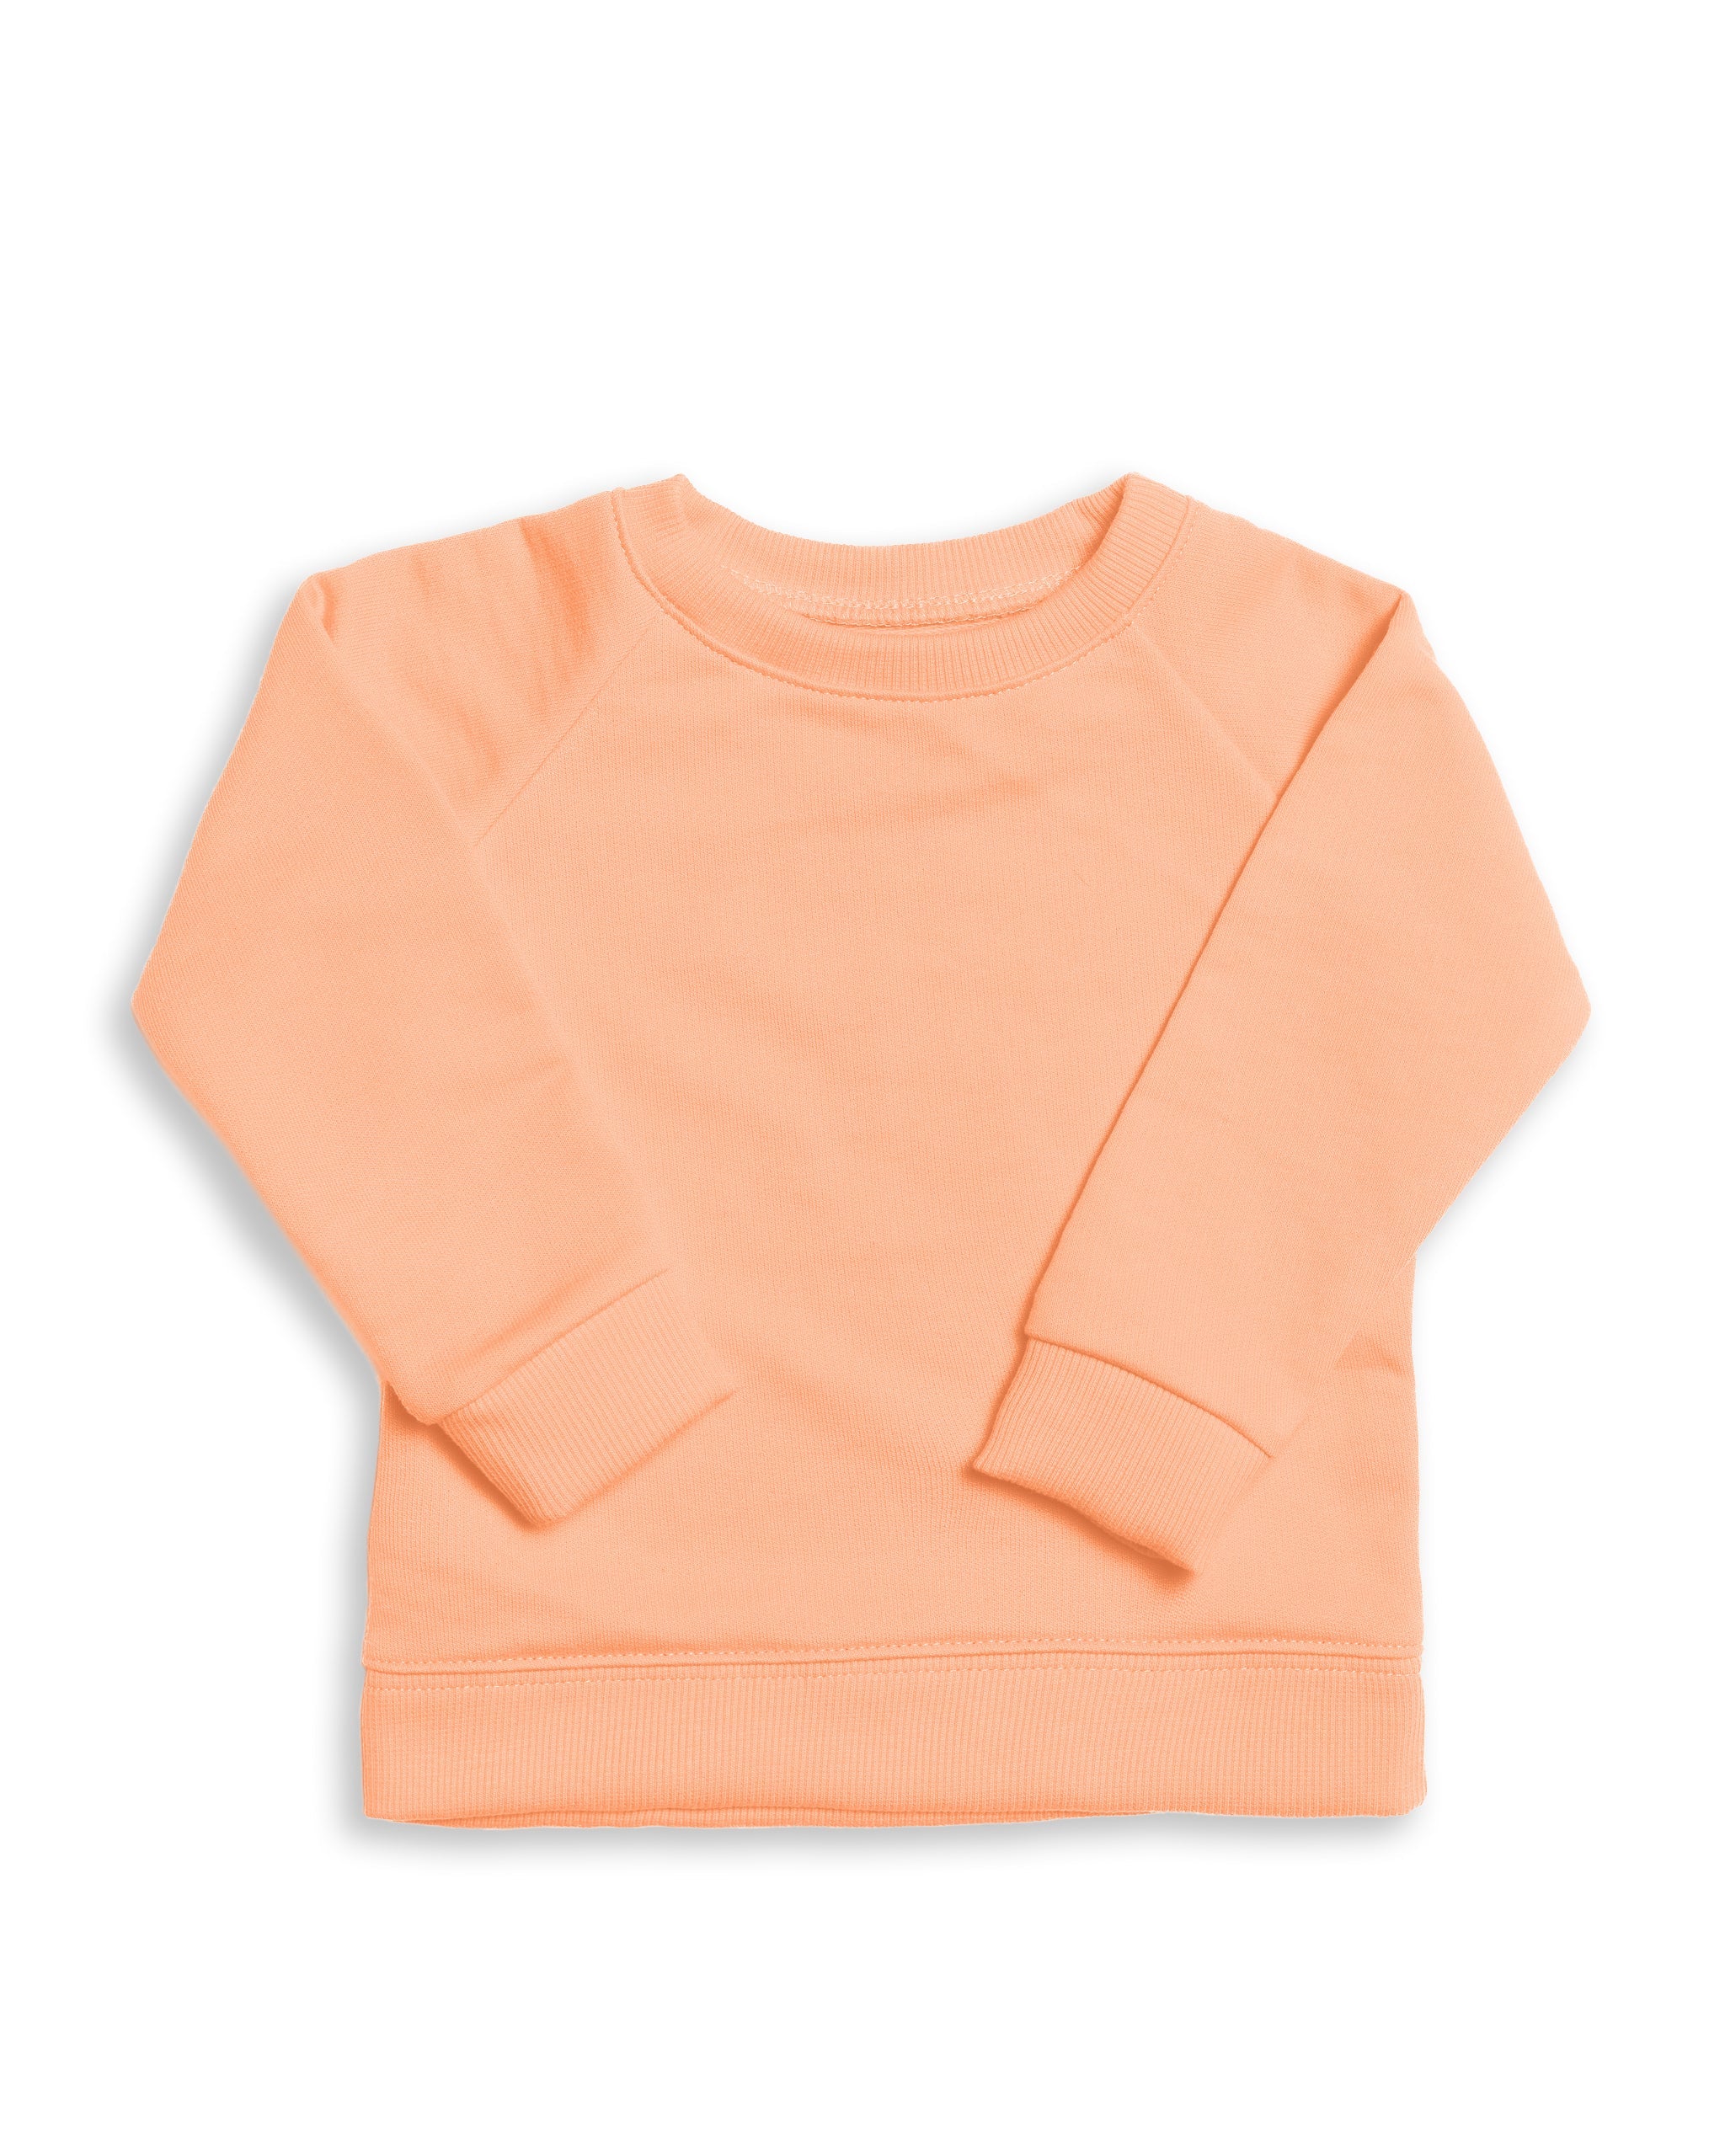 The Organic Pullover Sweatshirt [Orange Burst]